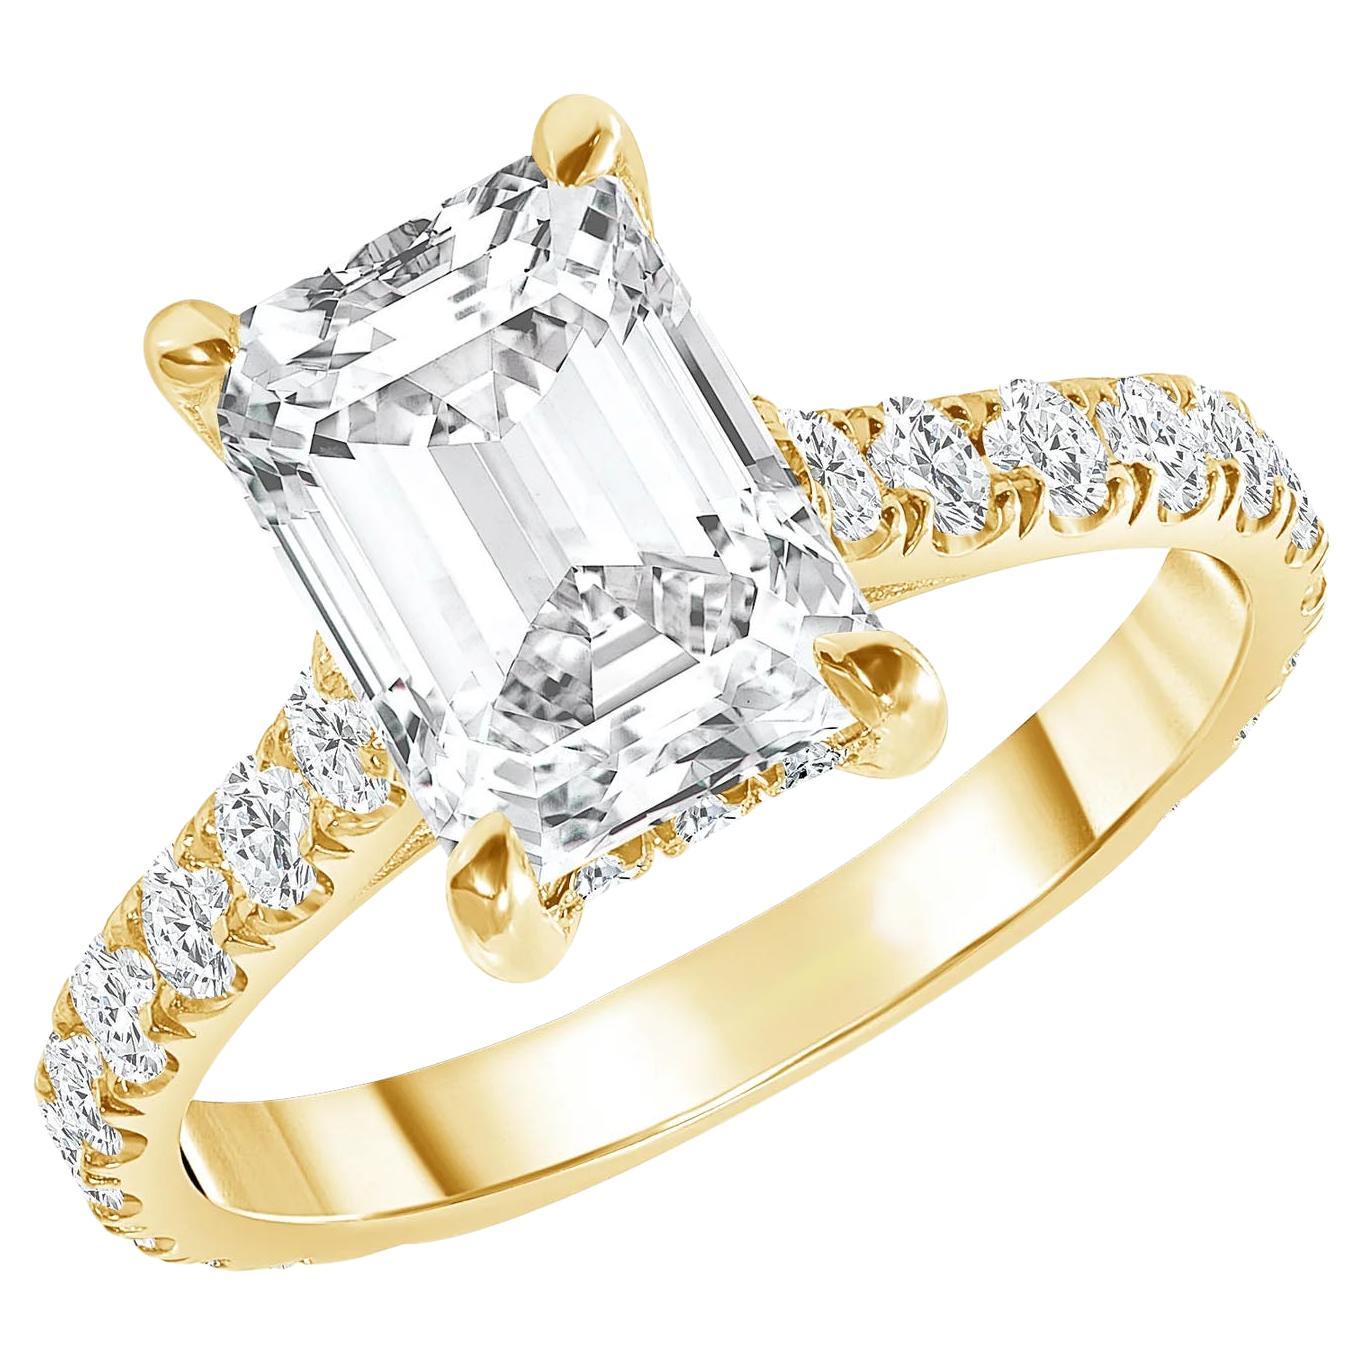 For Sale:  Averie's Engagement Ring Hidden Halo Setting